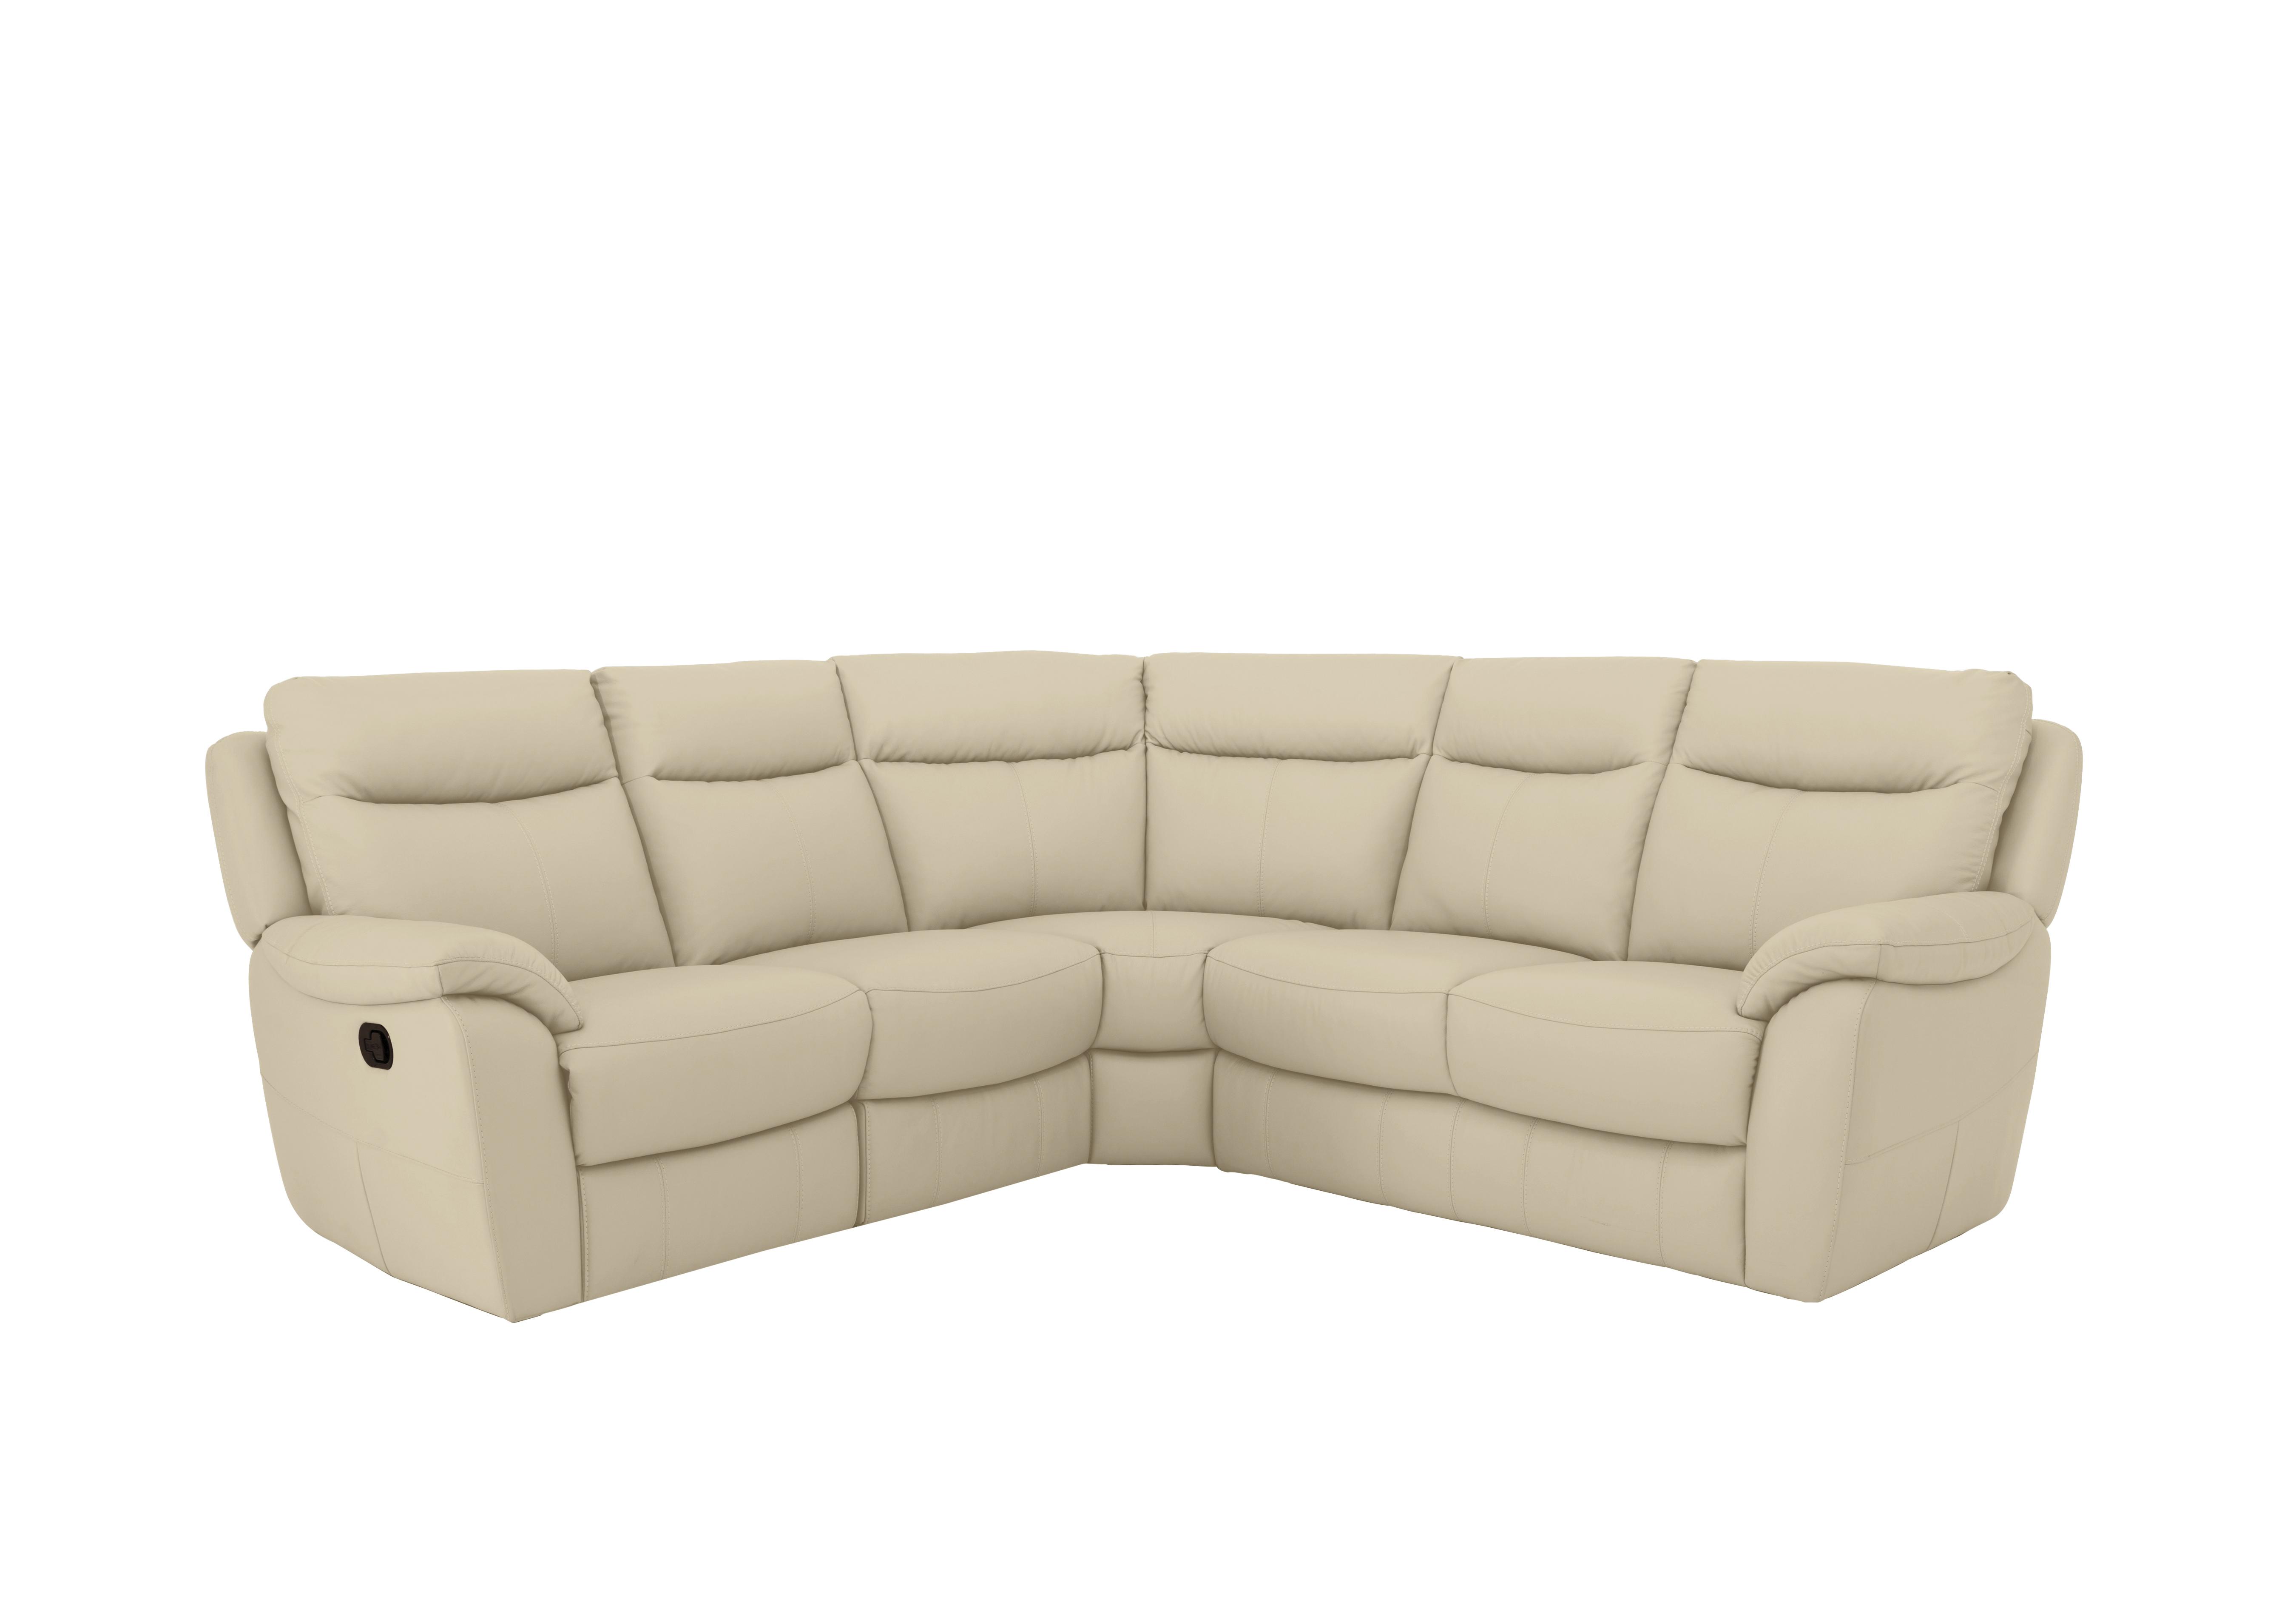 Snug Leather Corner Sofa in Bv-862c Bisque on Furniture Village